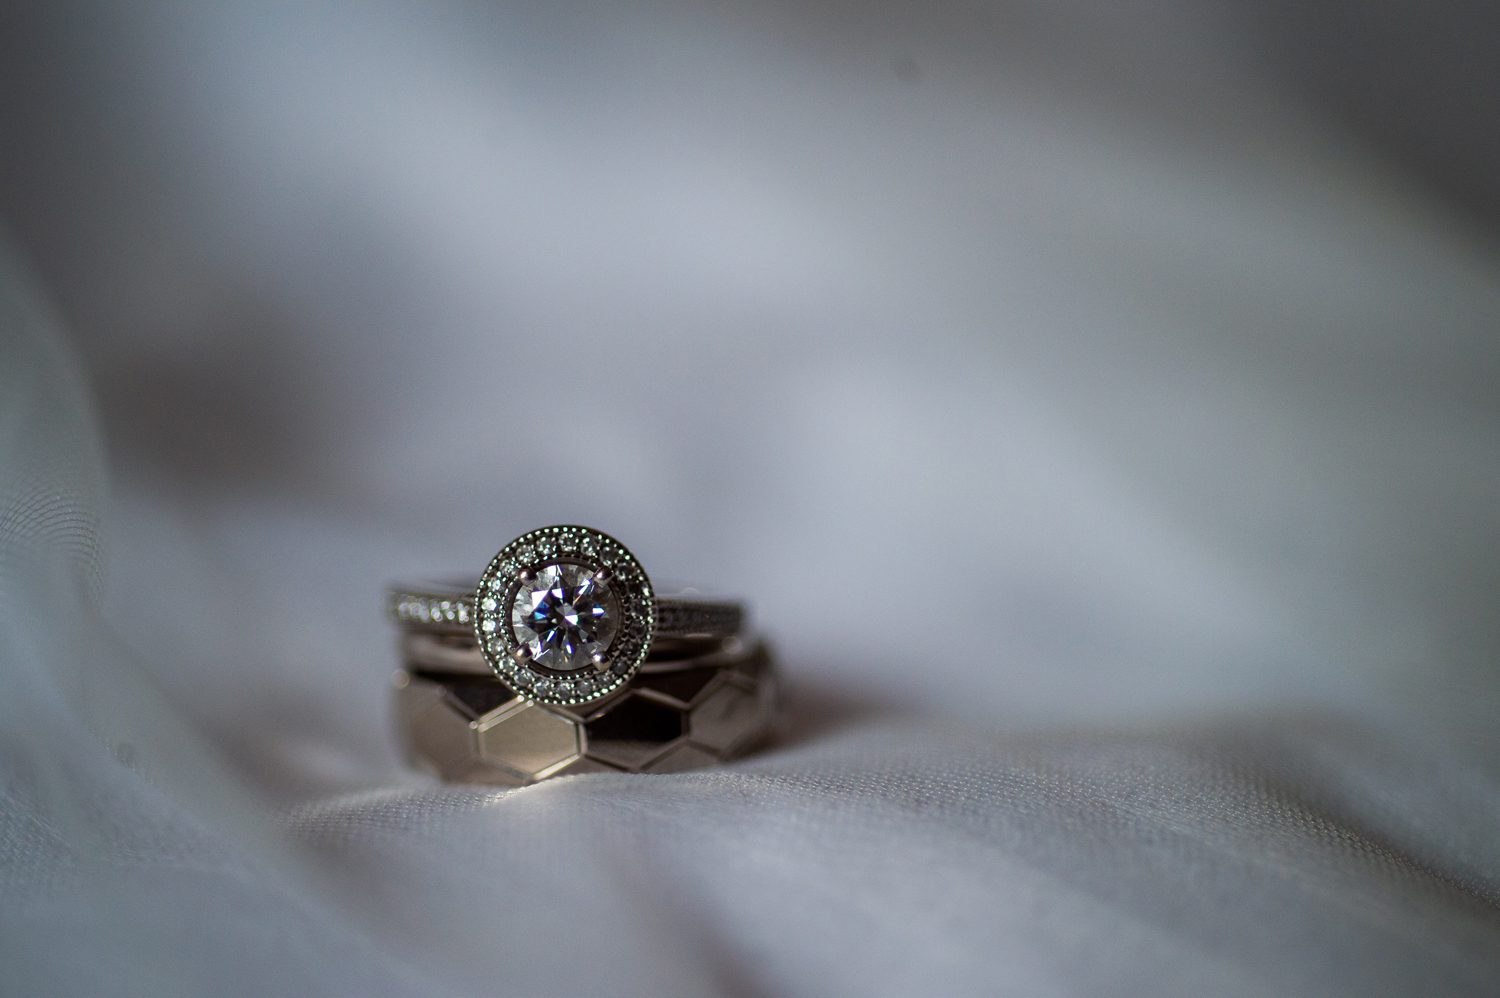 Wedding Ring Photo